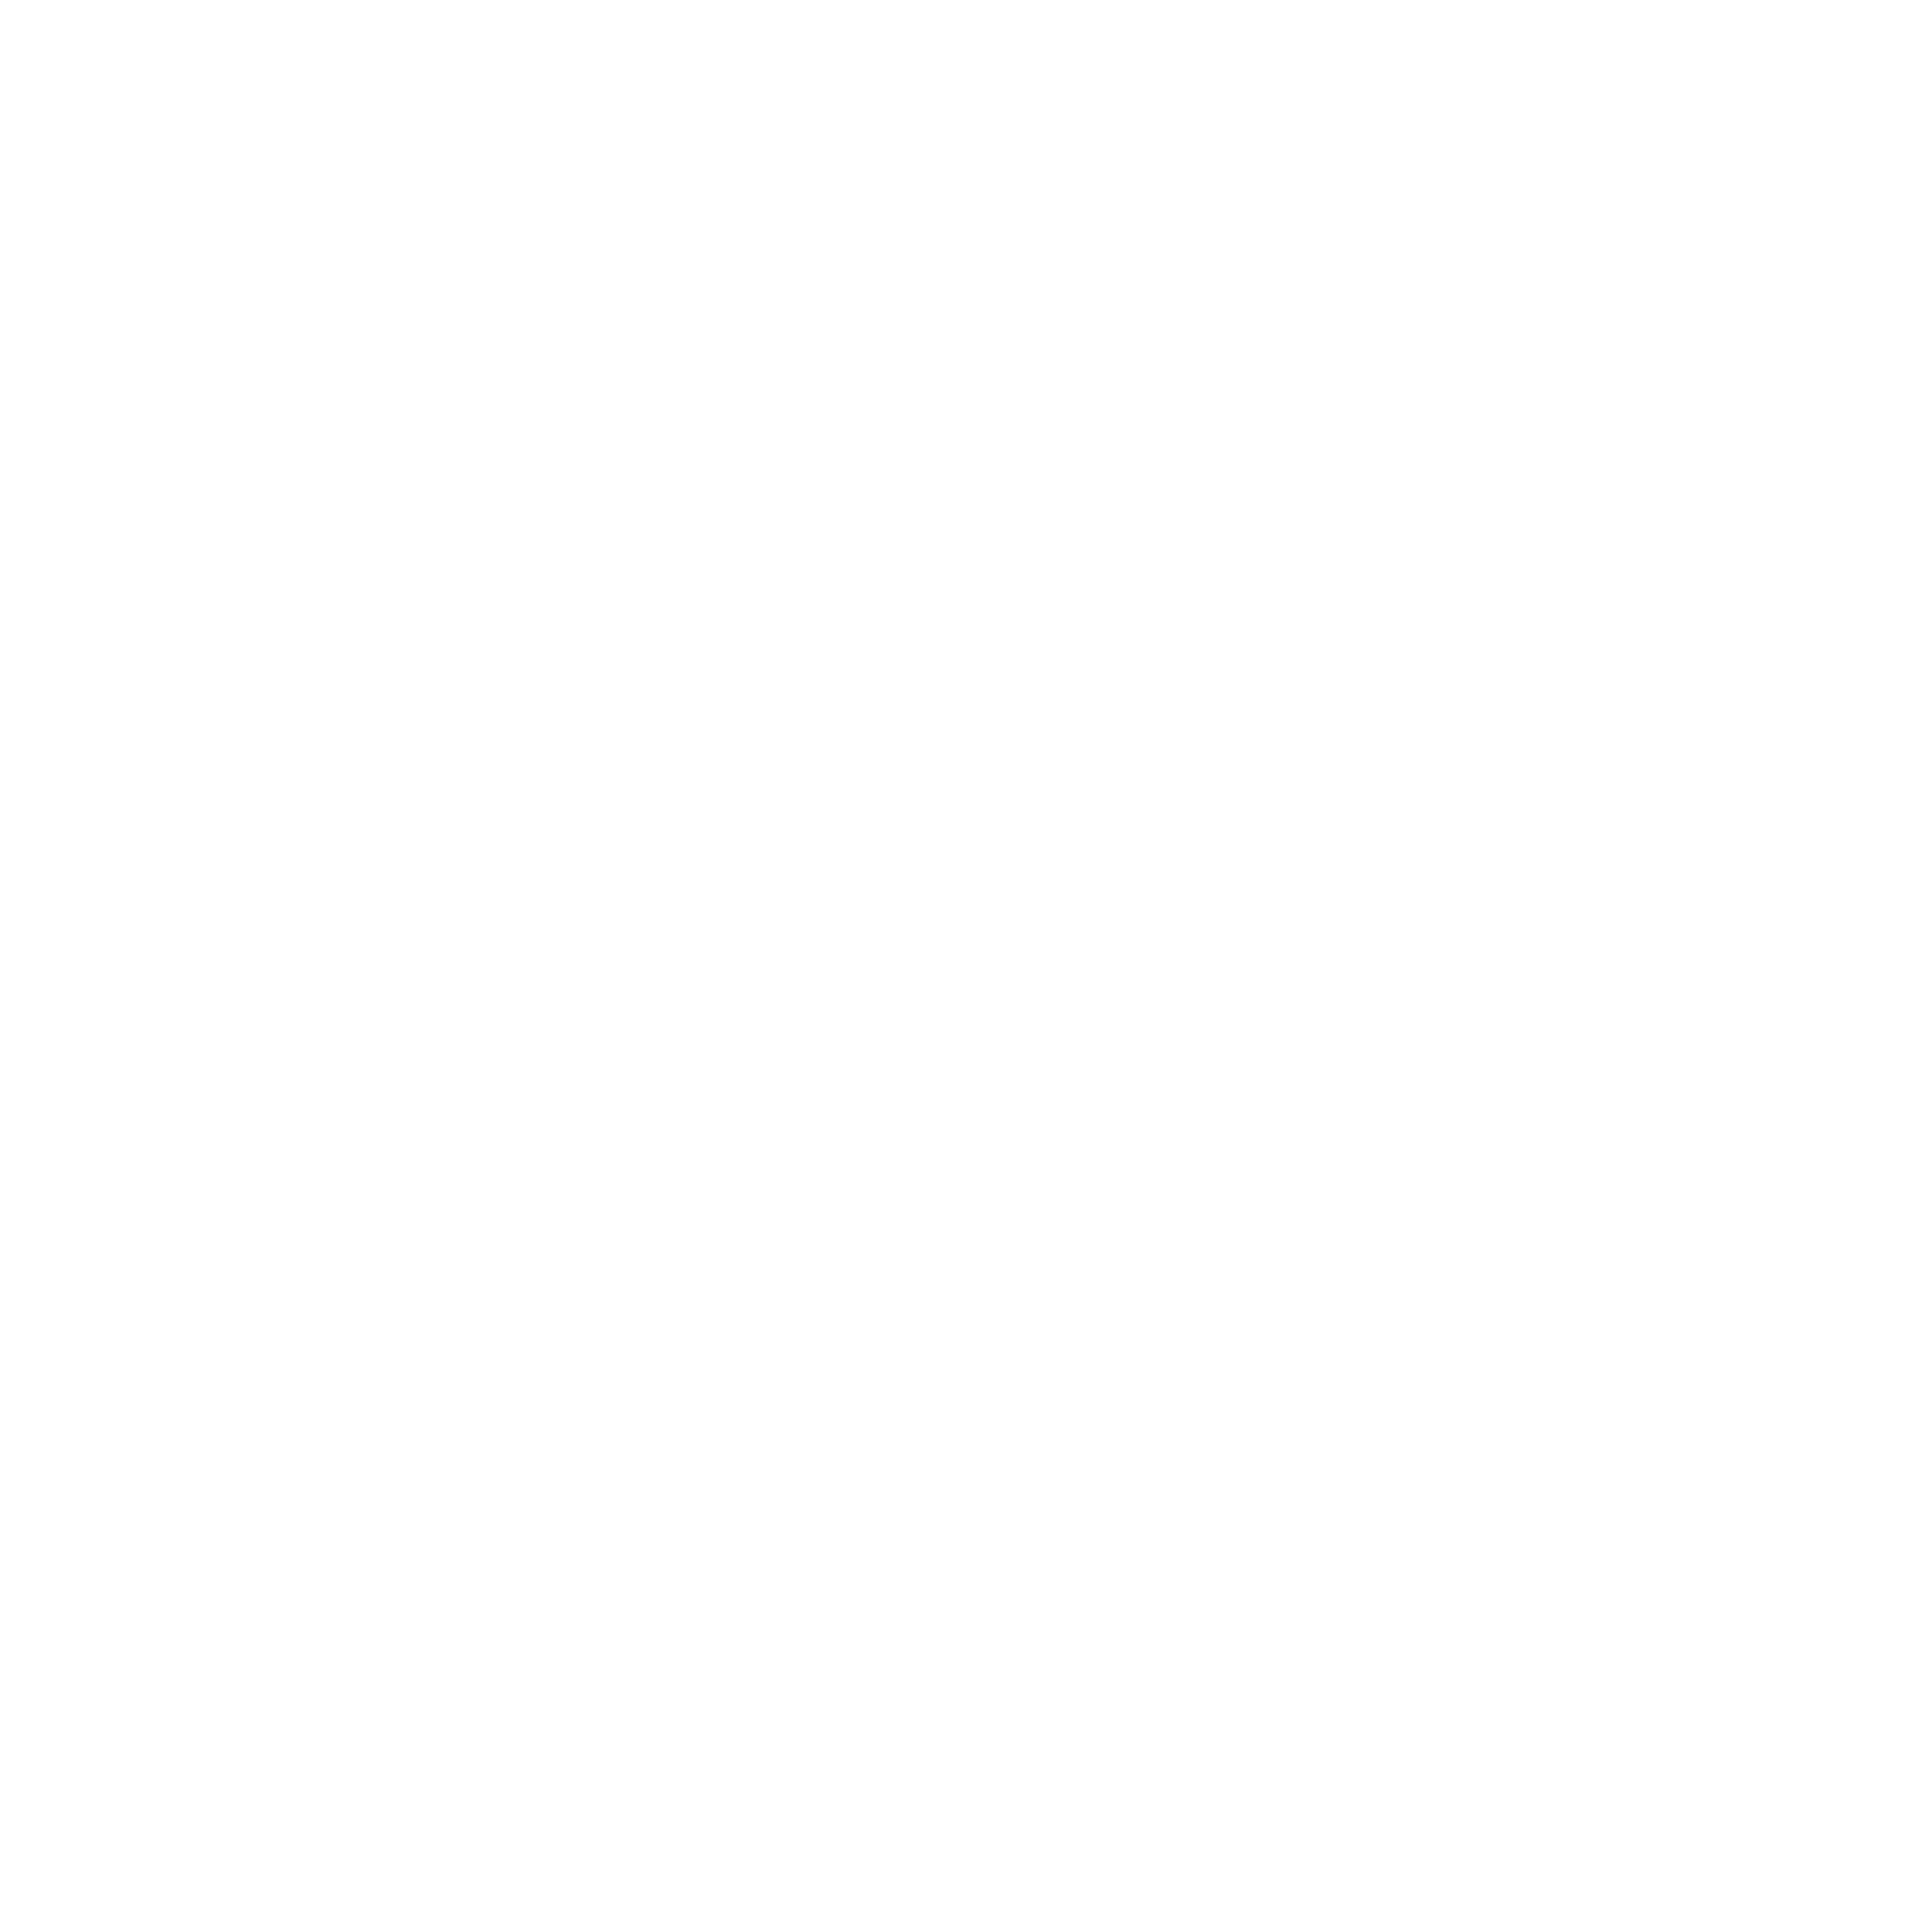 Terumo Logo - Terumo Logo PNG Transparent & SVG Vector